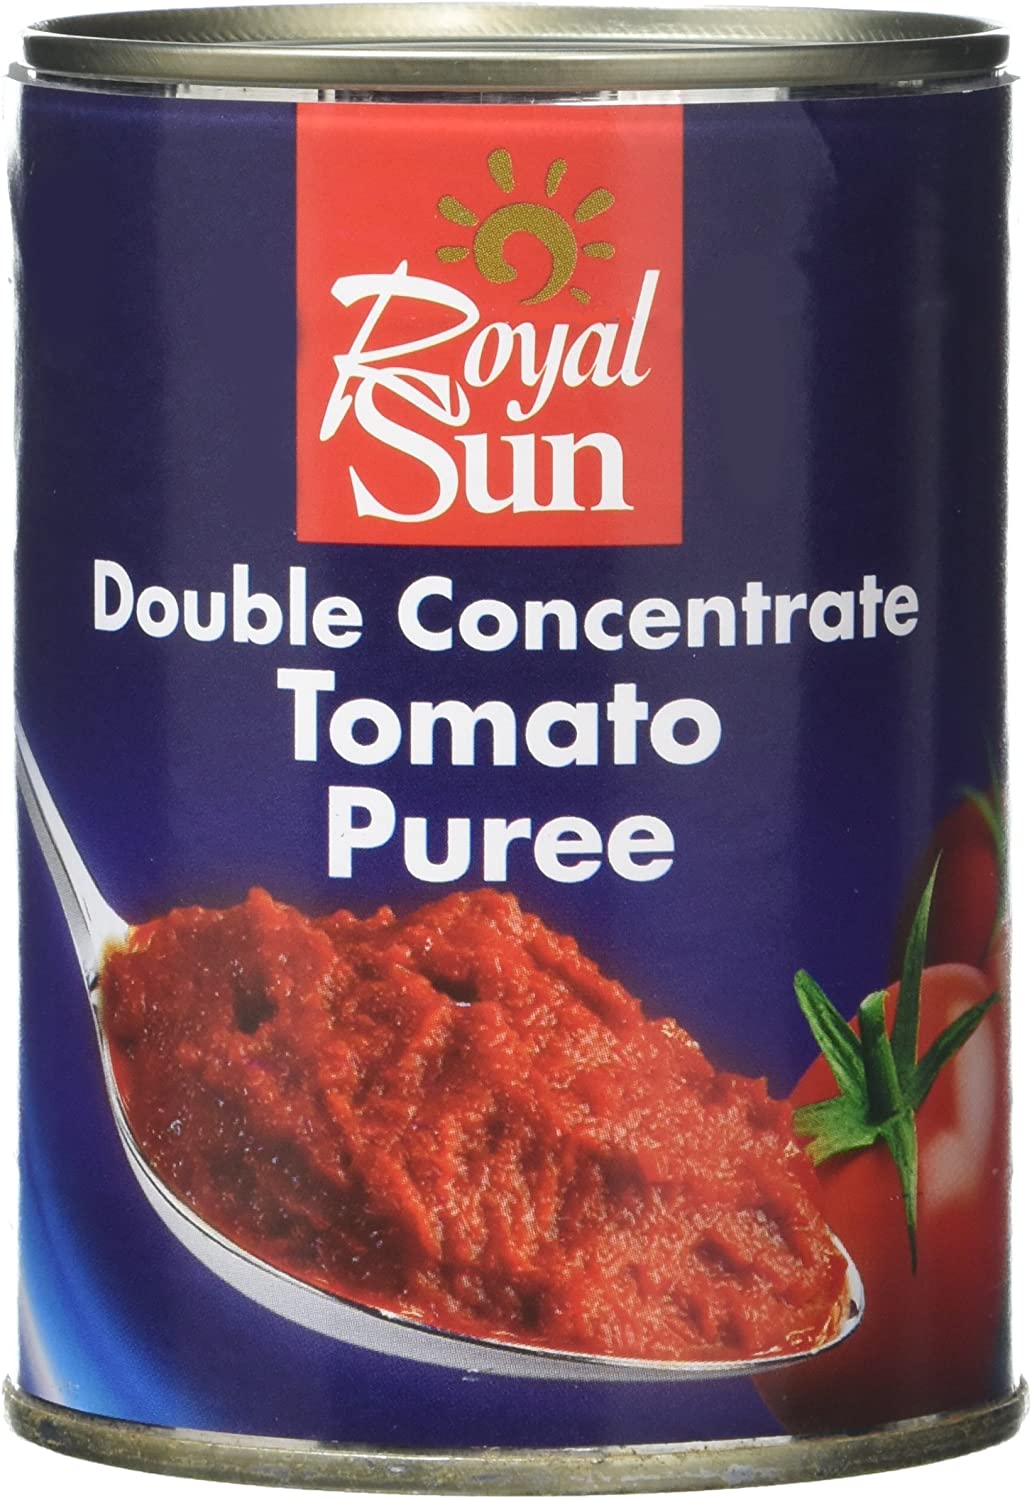 Royal Sun Tomato Puree 400g Box of 12